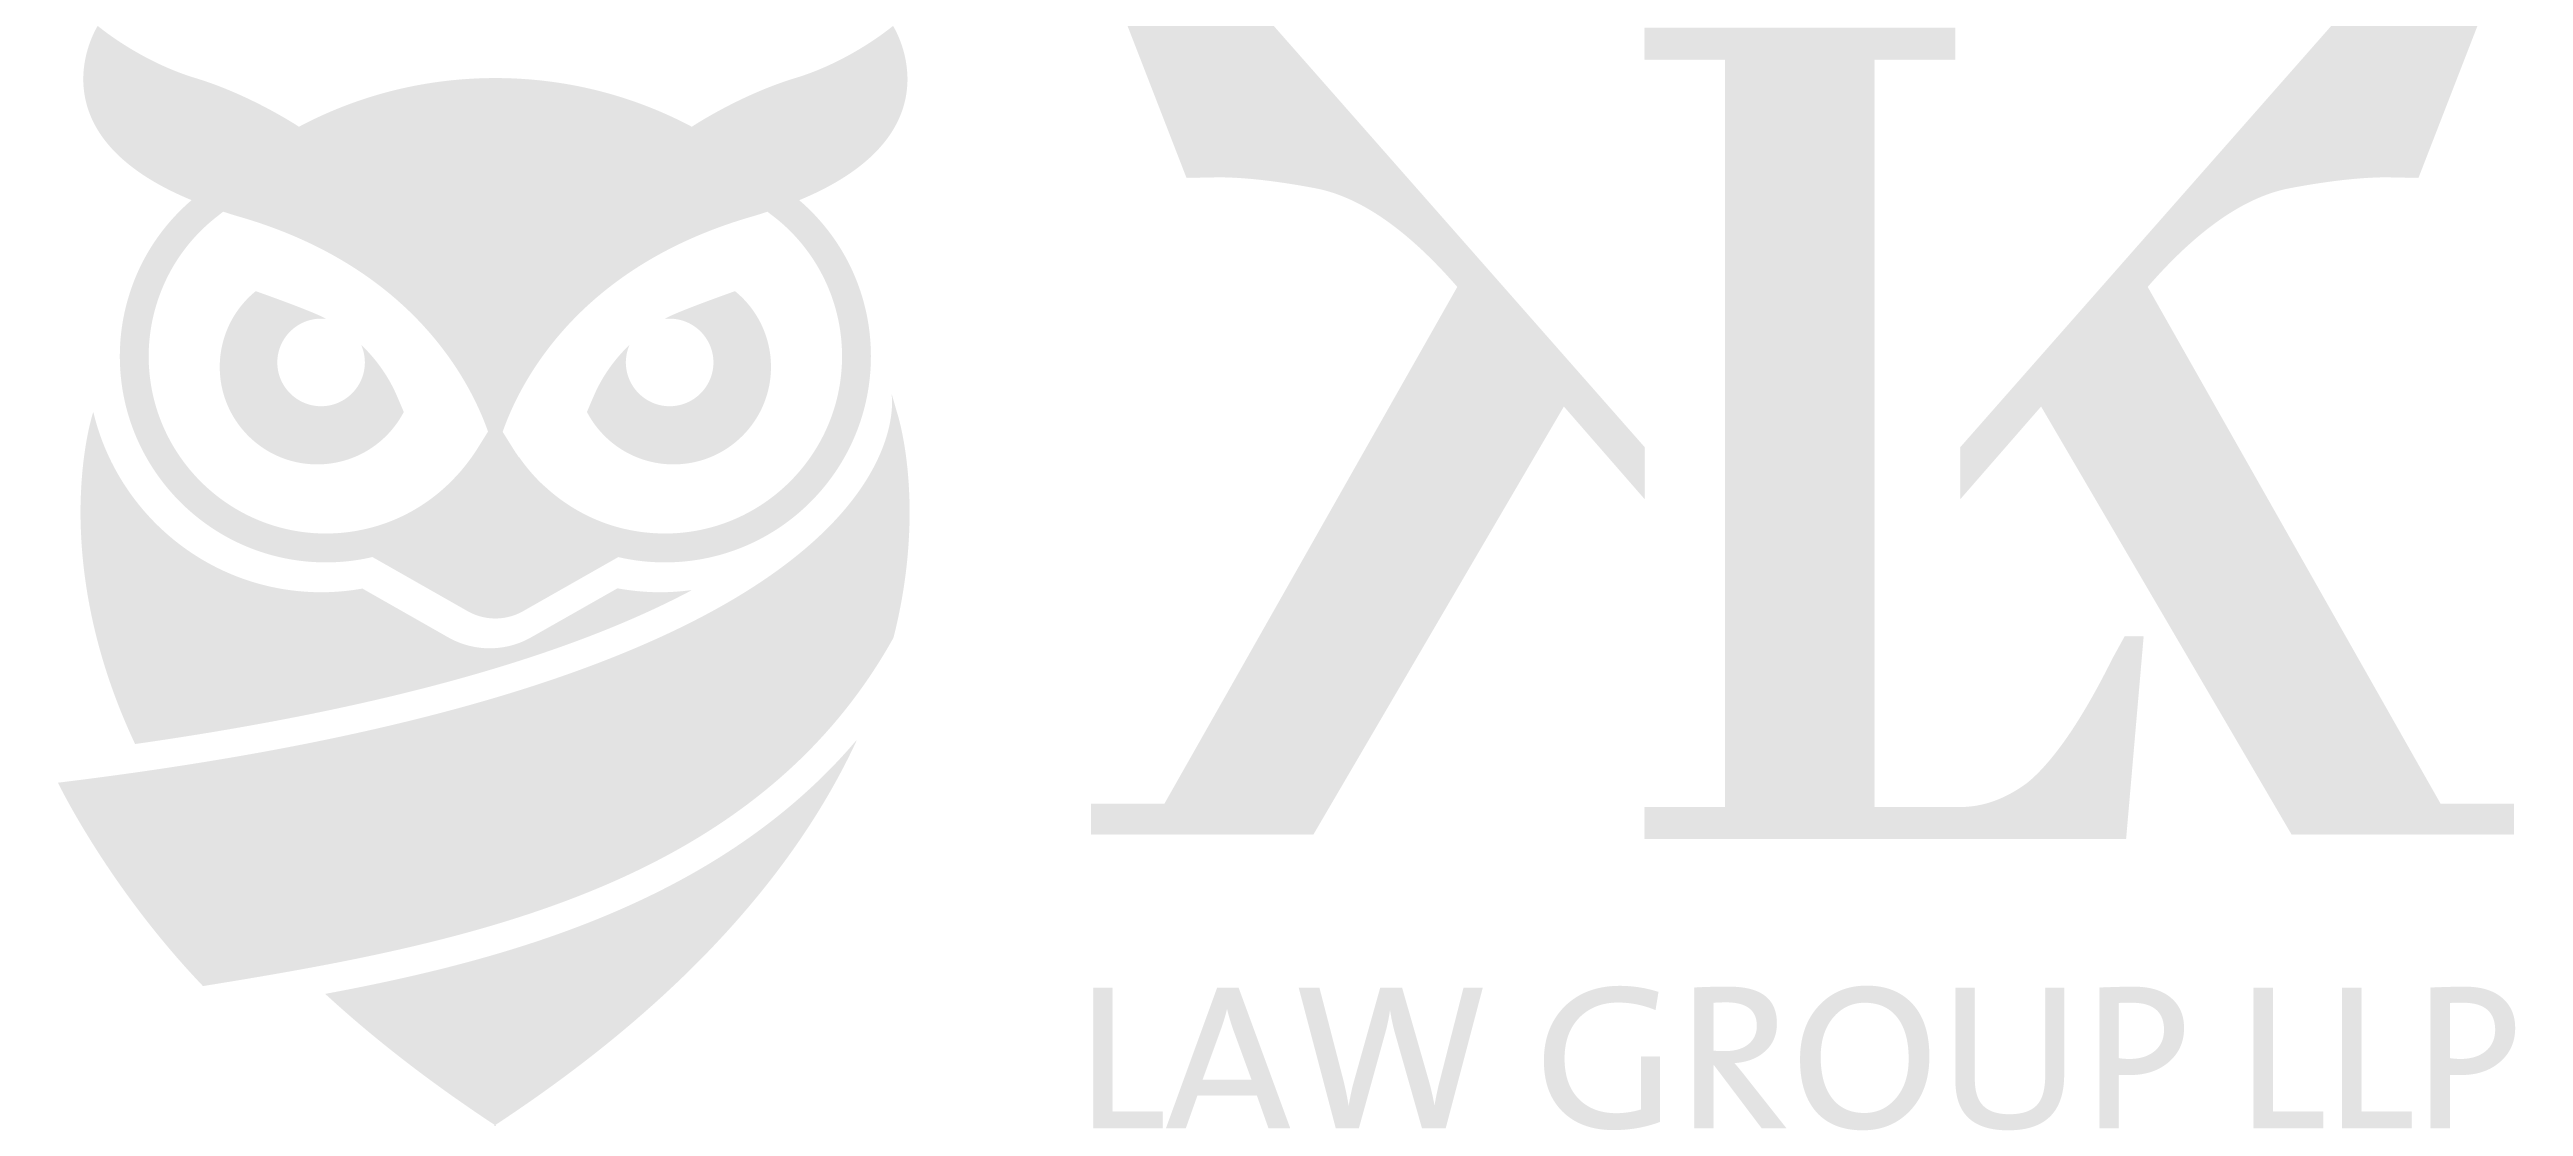 KLK Law Group